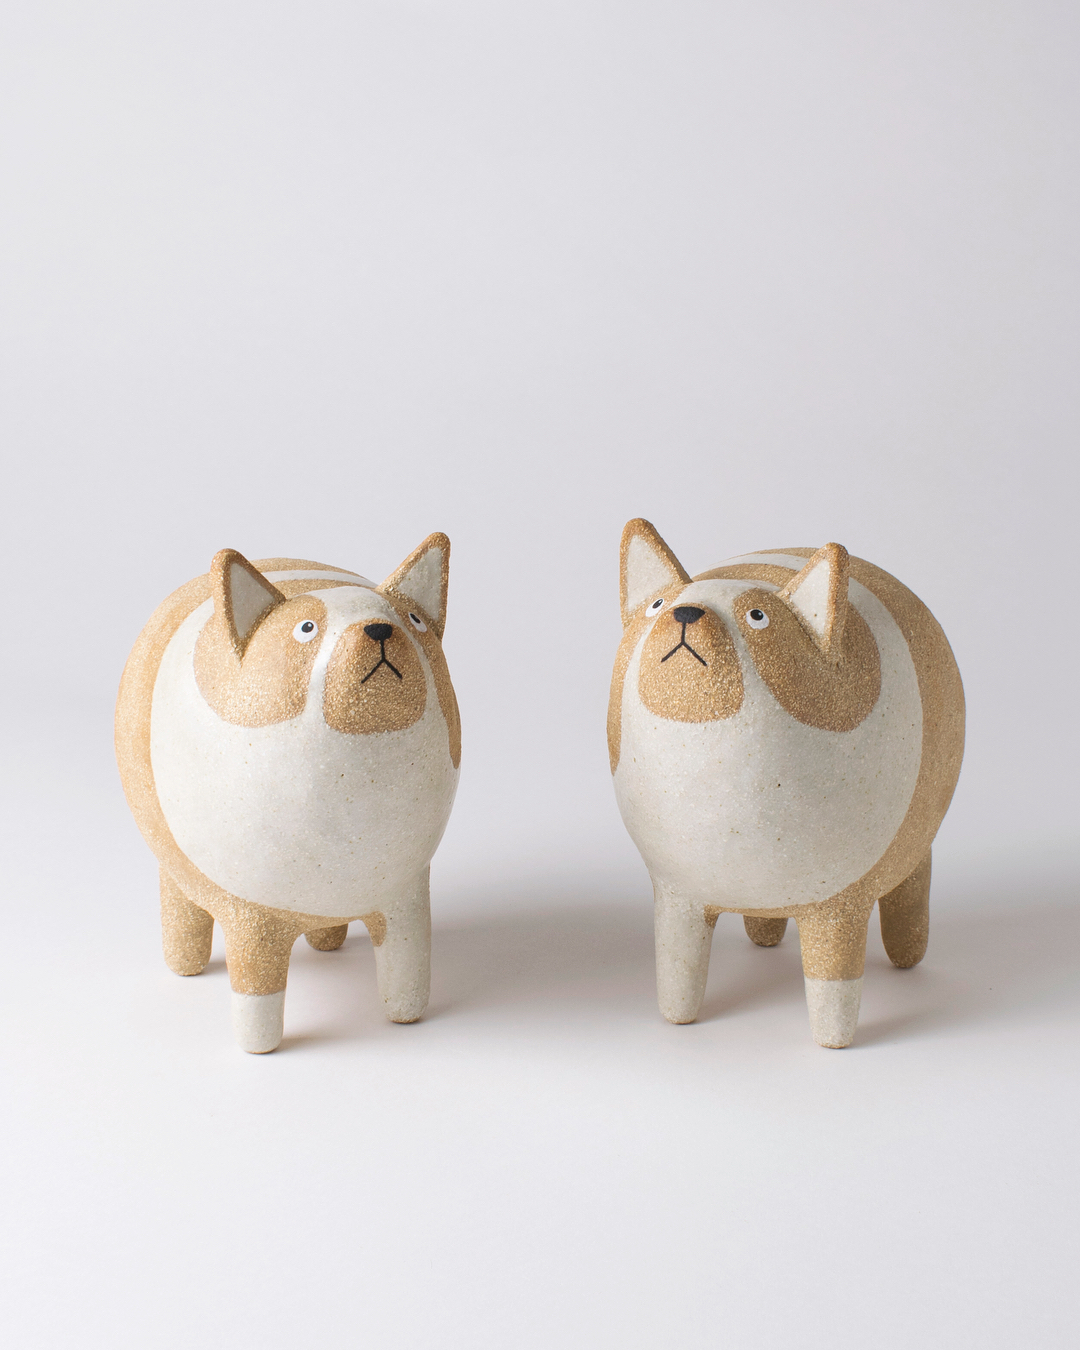 Ceramic creatures by Helen Hodson